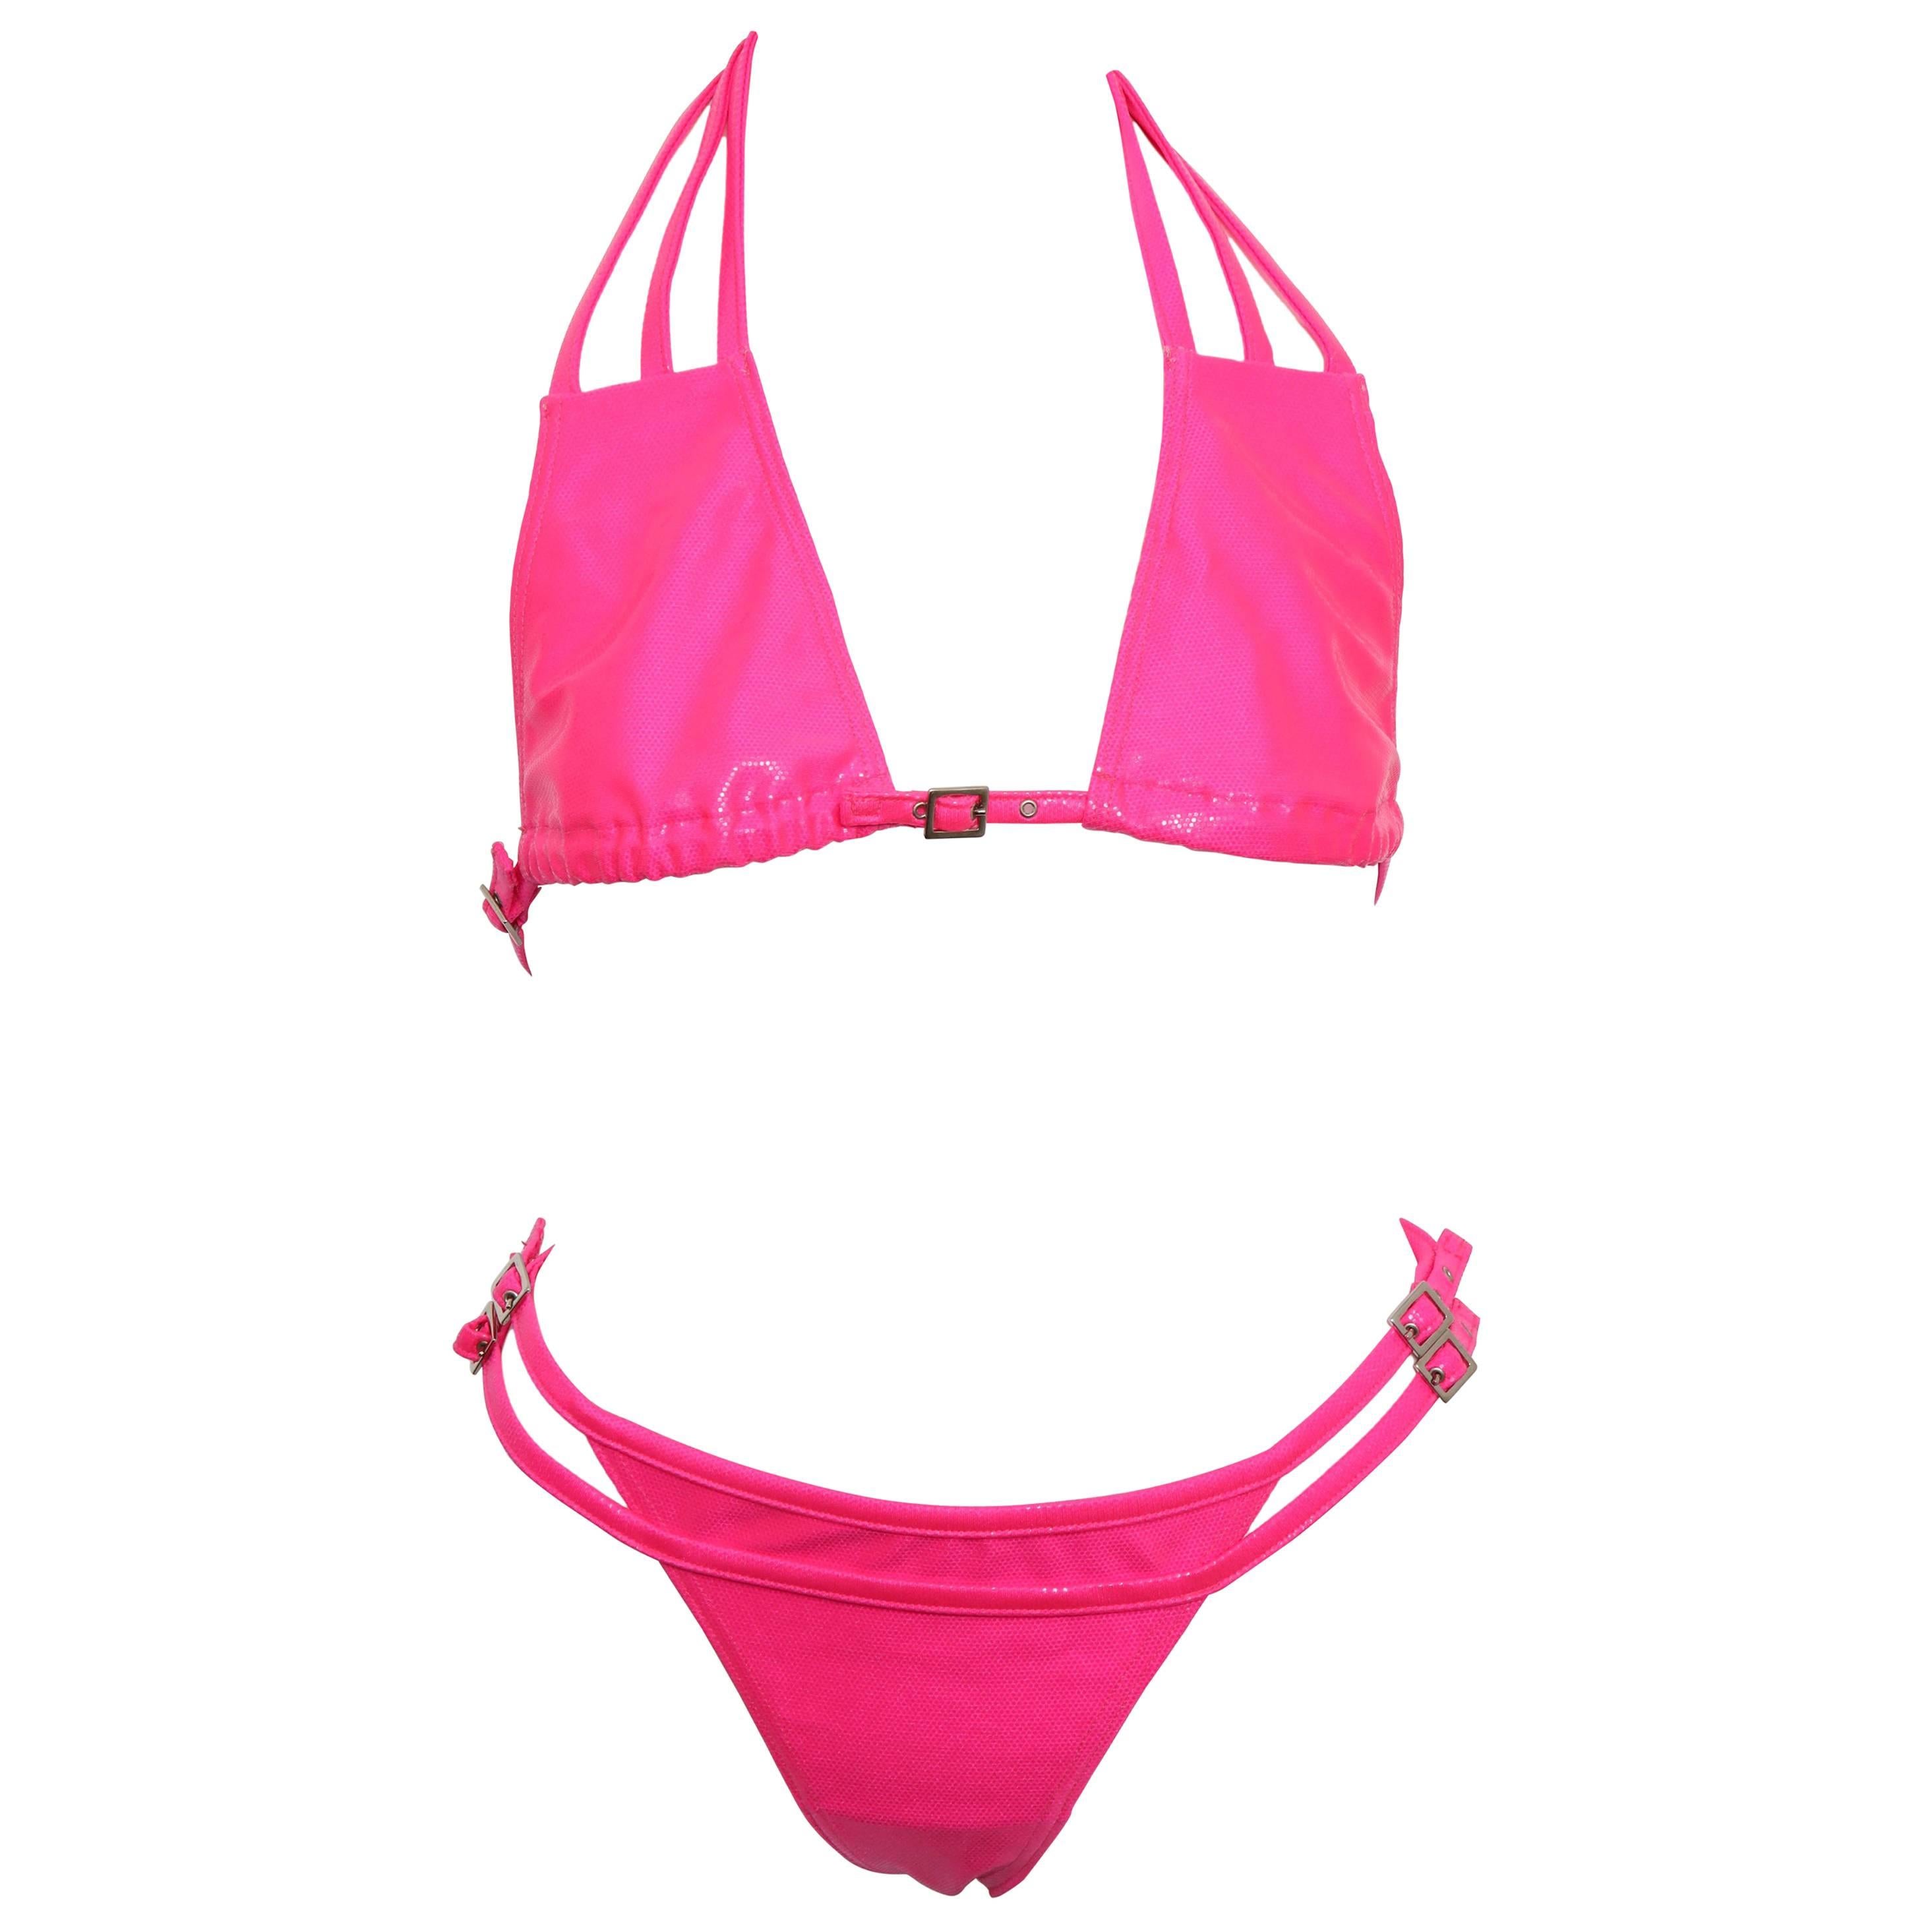 John Galliano for Christian Dior Pink Bikini For Sale